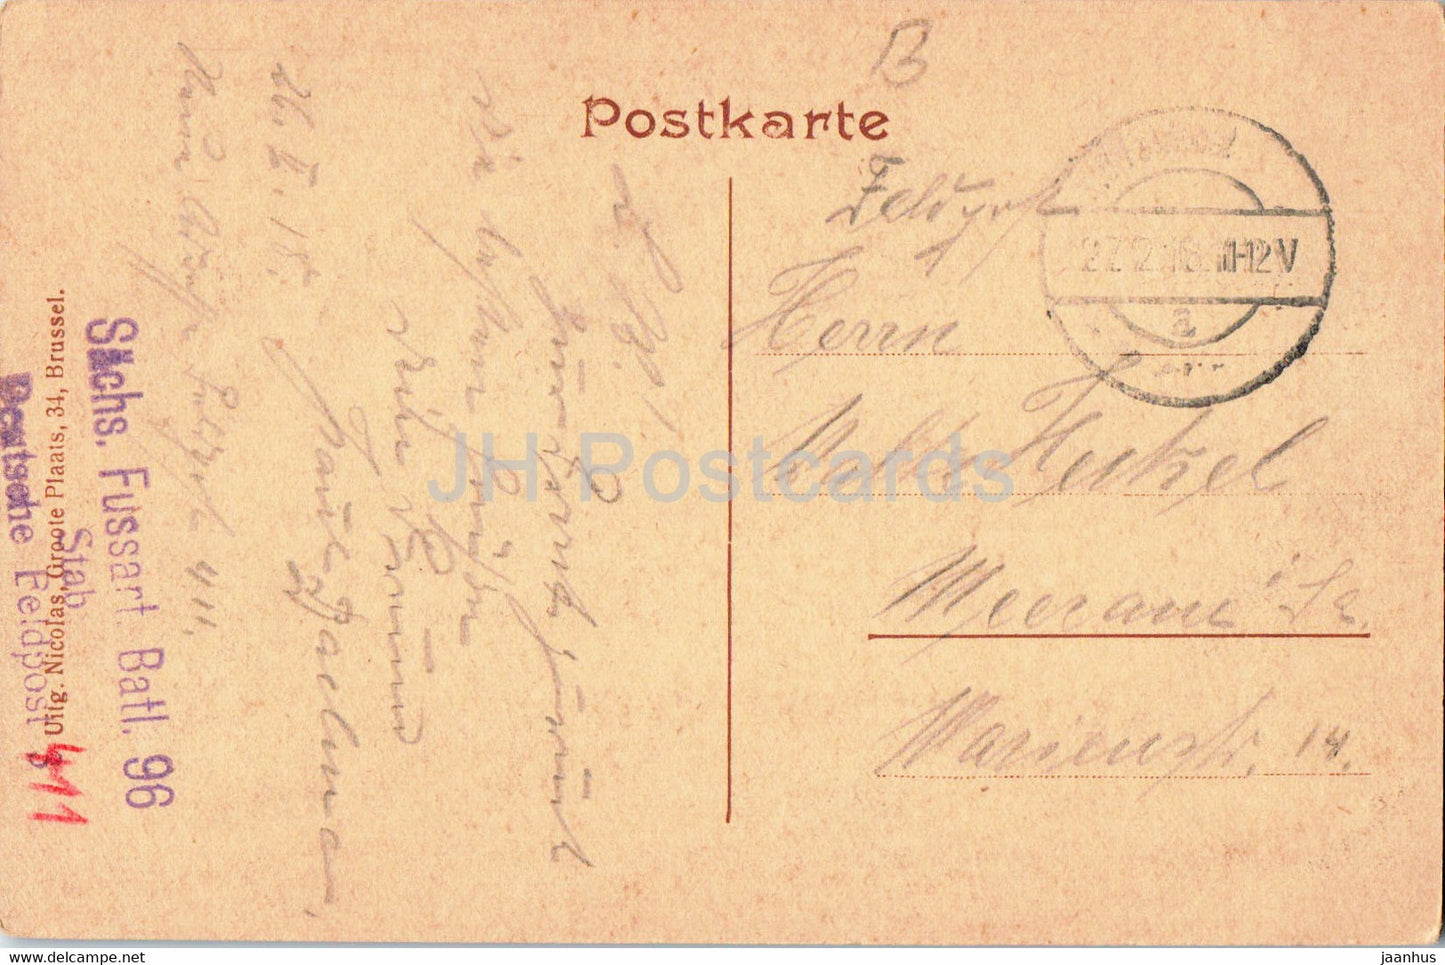 Bruxelles - Brussels - Brussel Konigspalast - feldpost - military mail - old postcard - 1918 - Belgium - used